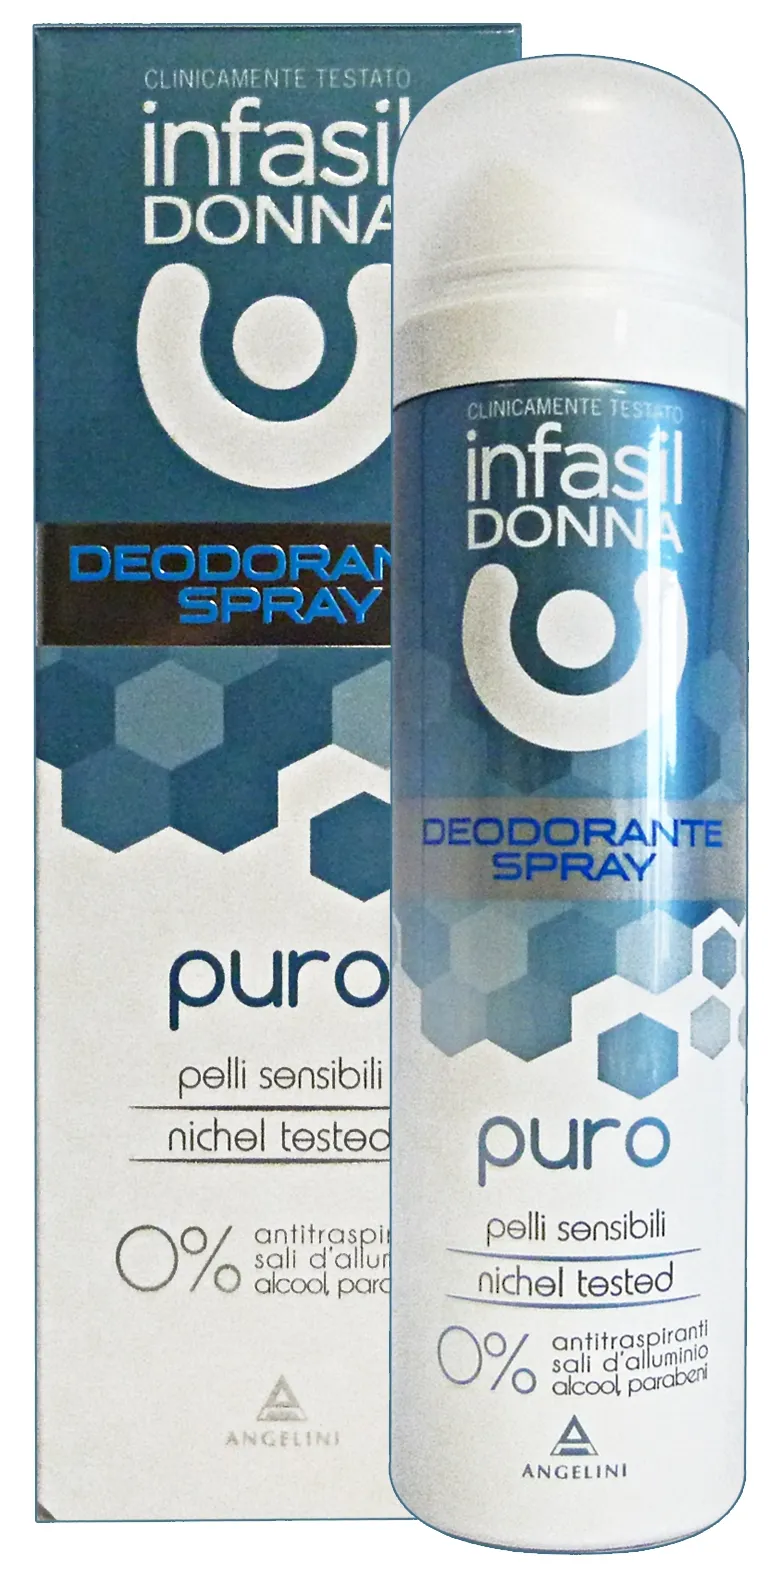 "INFASIL Dedorante spray Puro 150 ml - Deodorante Femminile E Unisex"